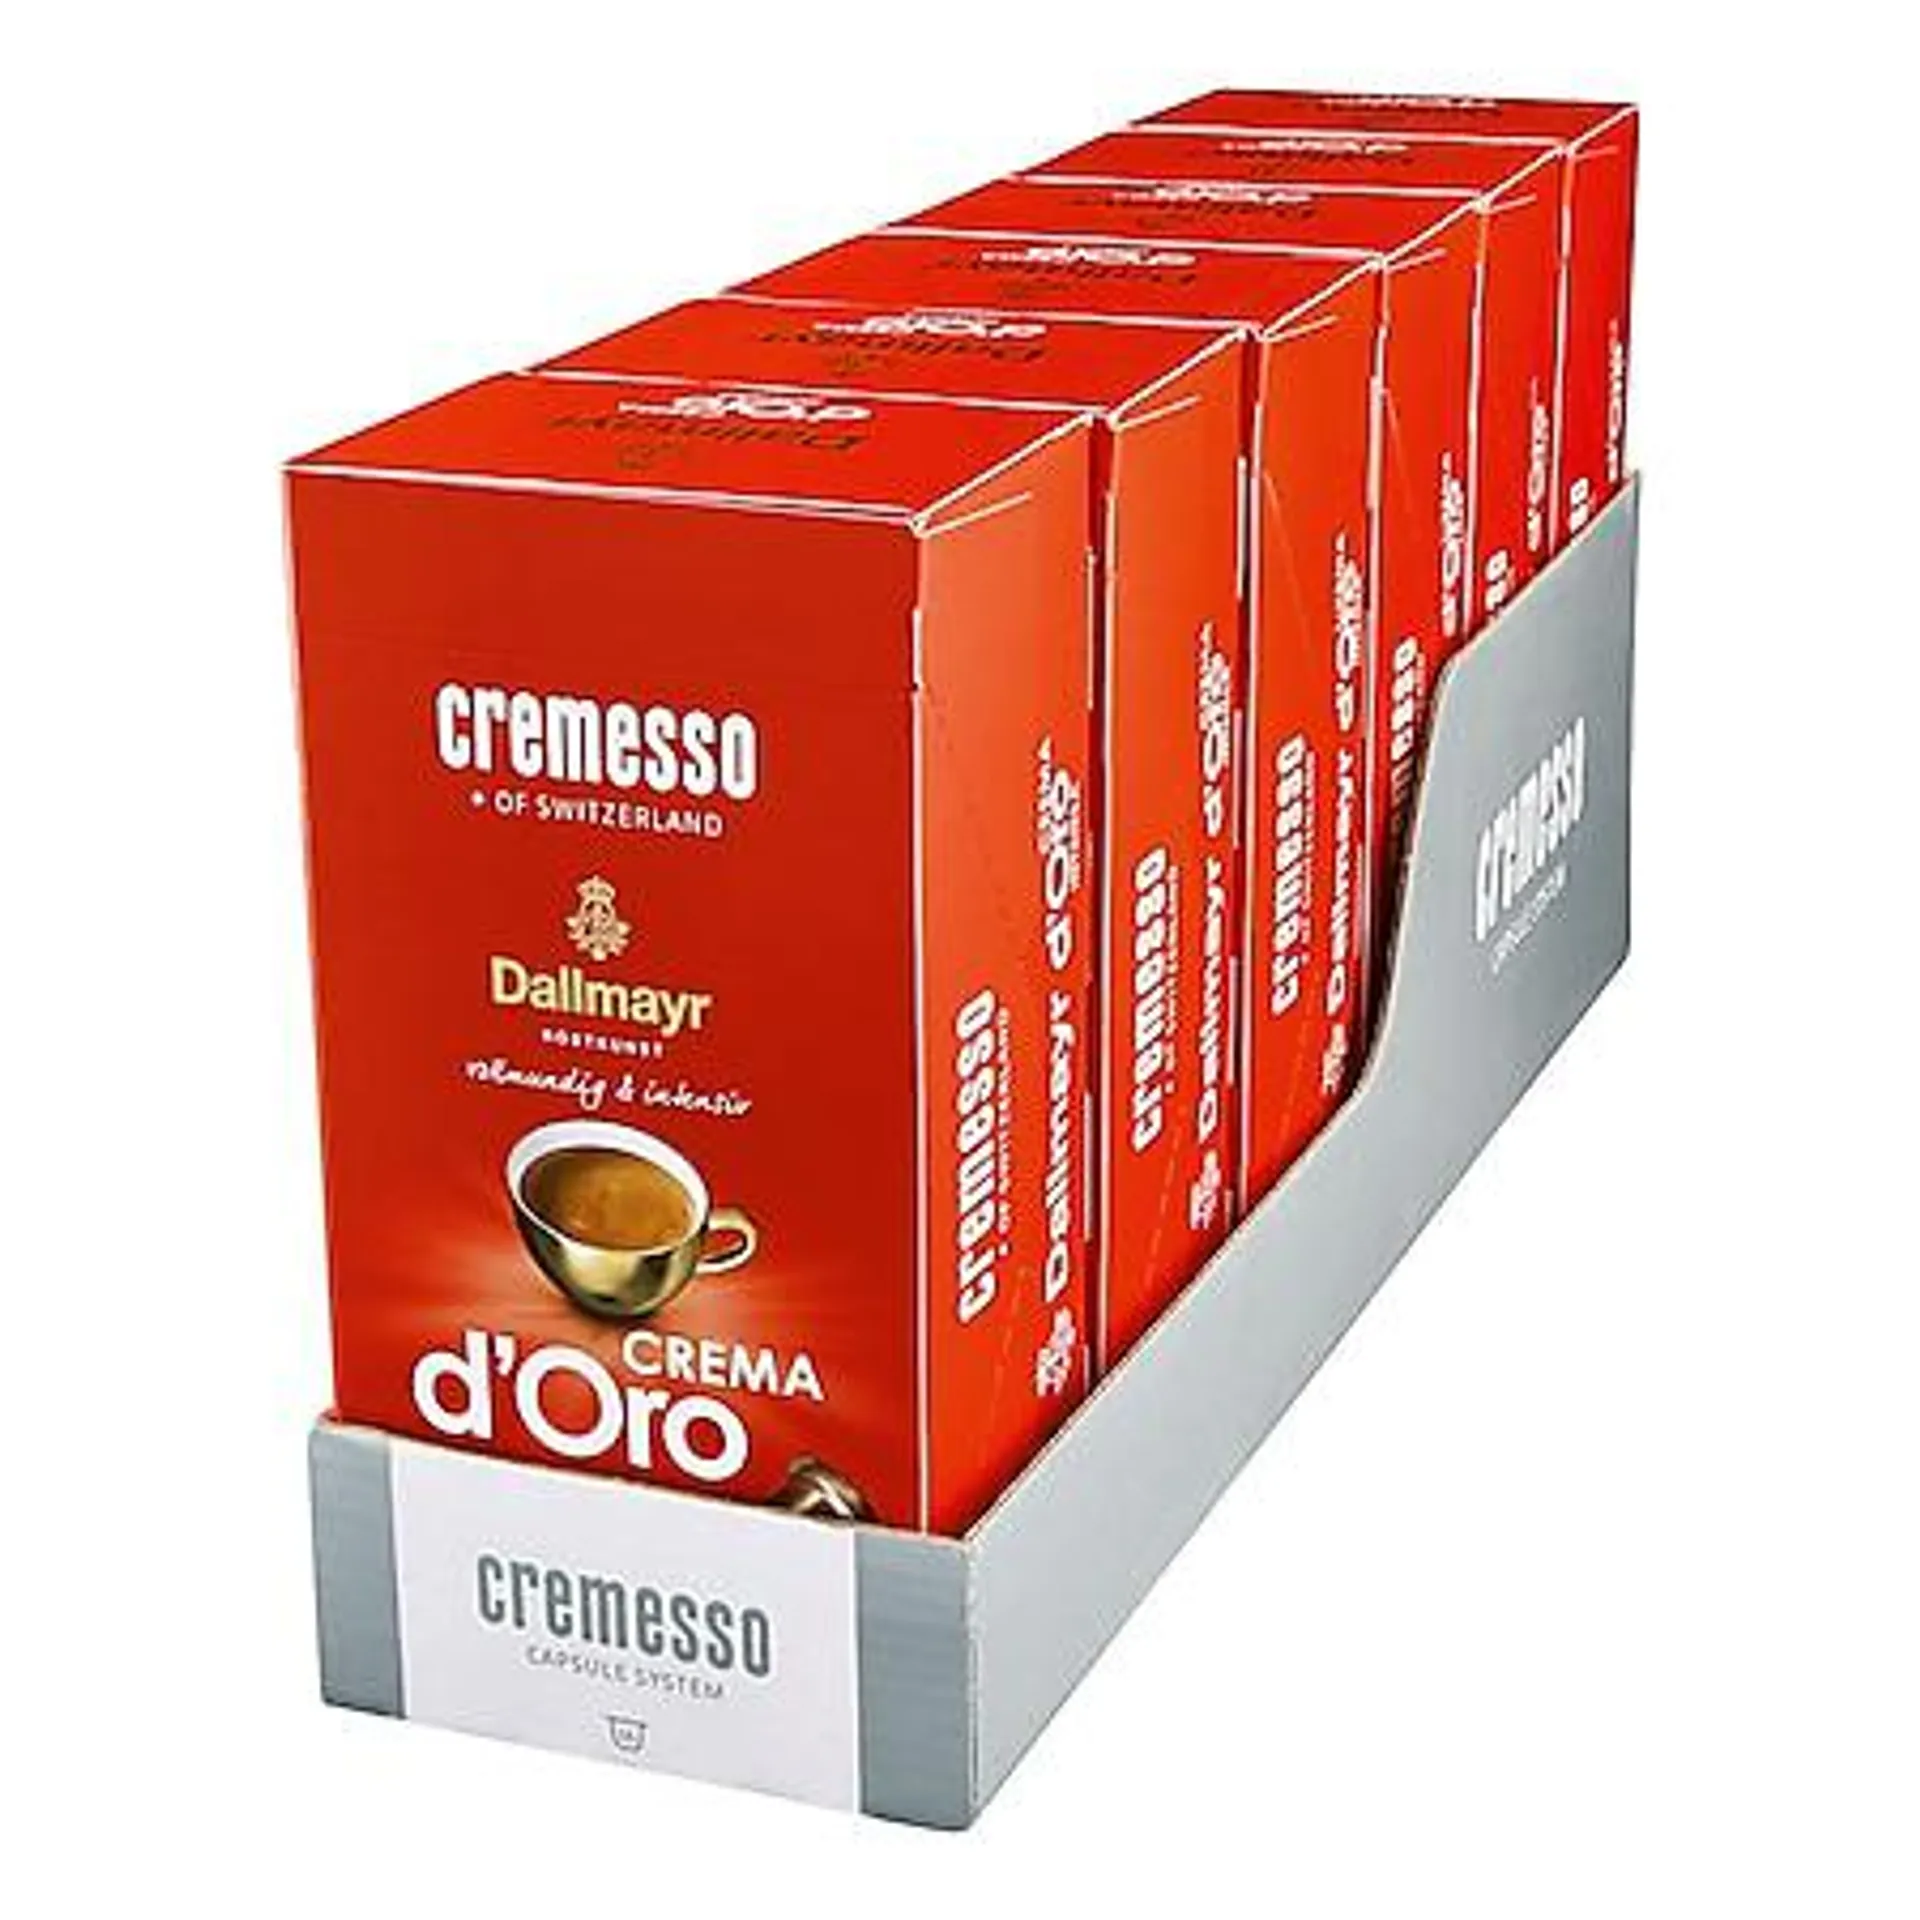 Cremesso Dallmayr Crema dOro intensa Kaffee 16 Kapseln 91 g, 6er Pack